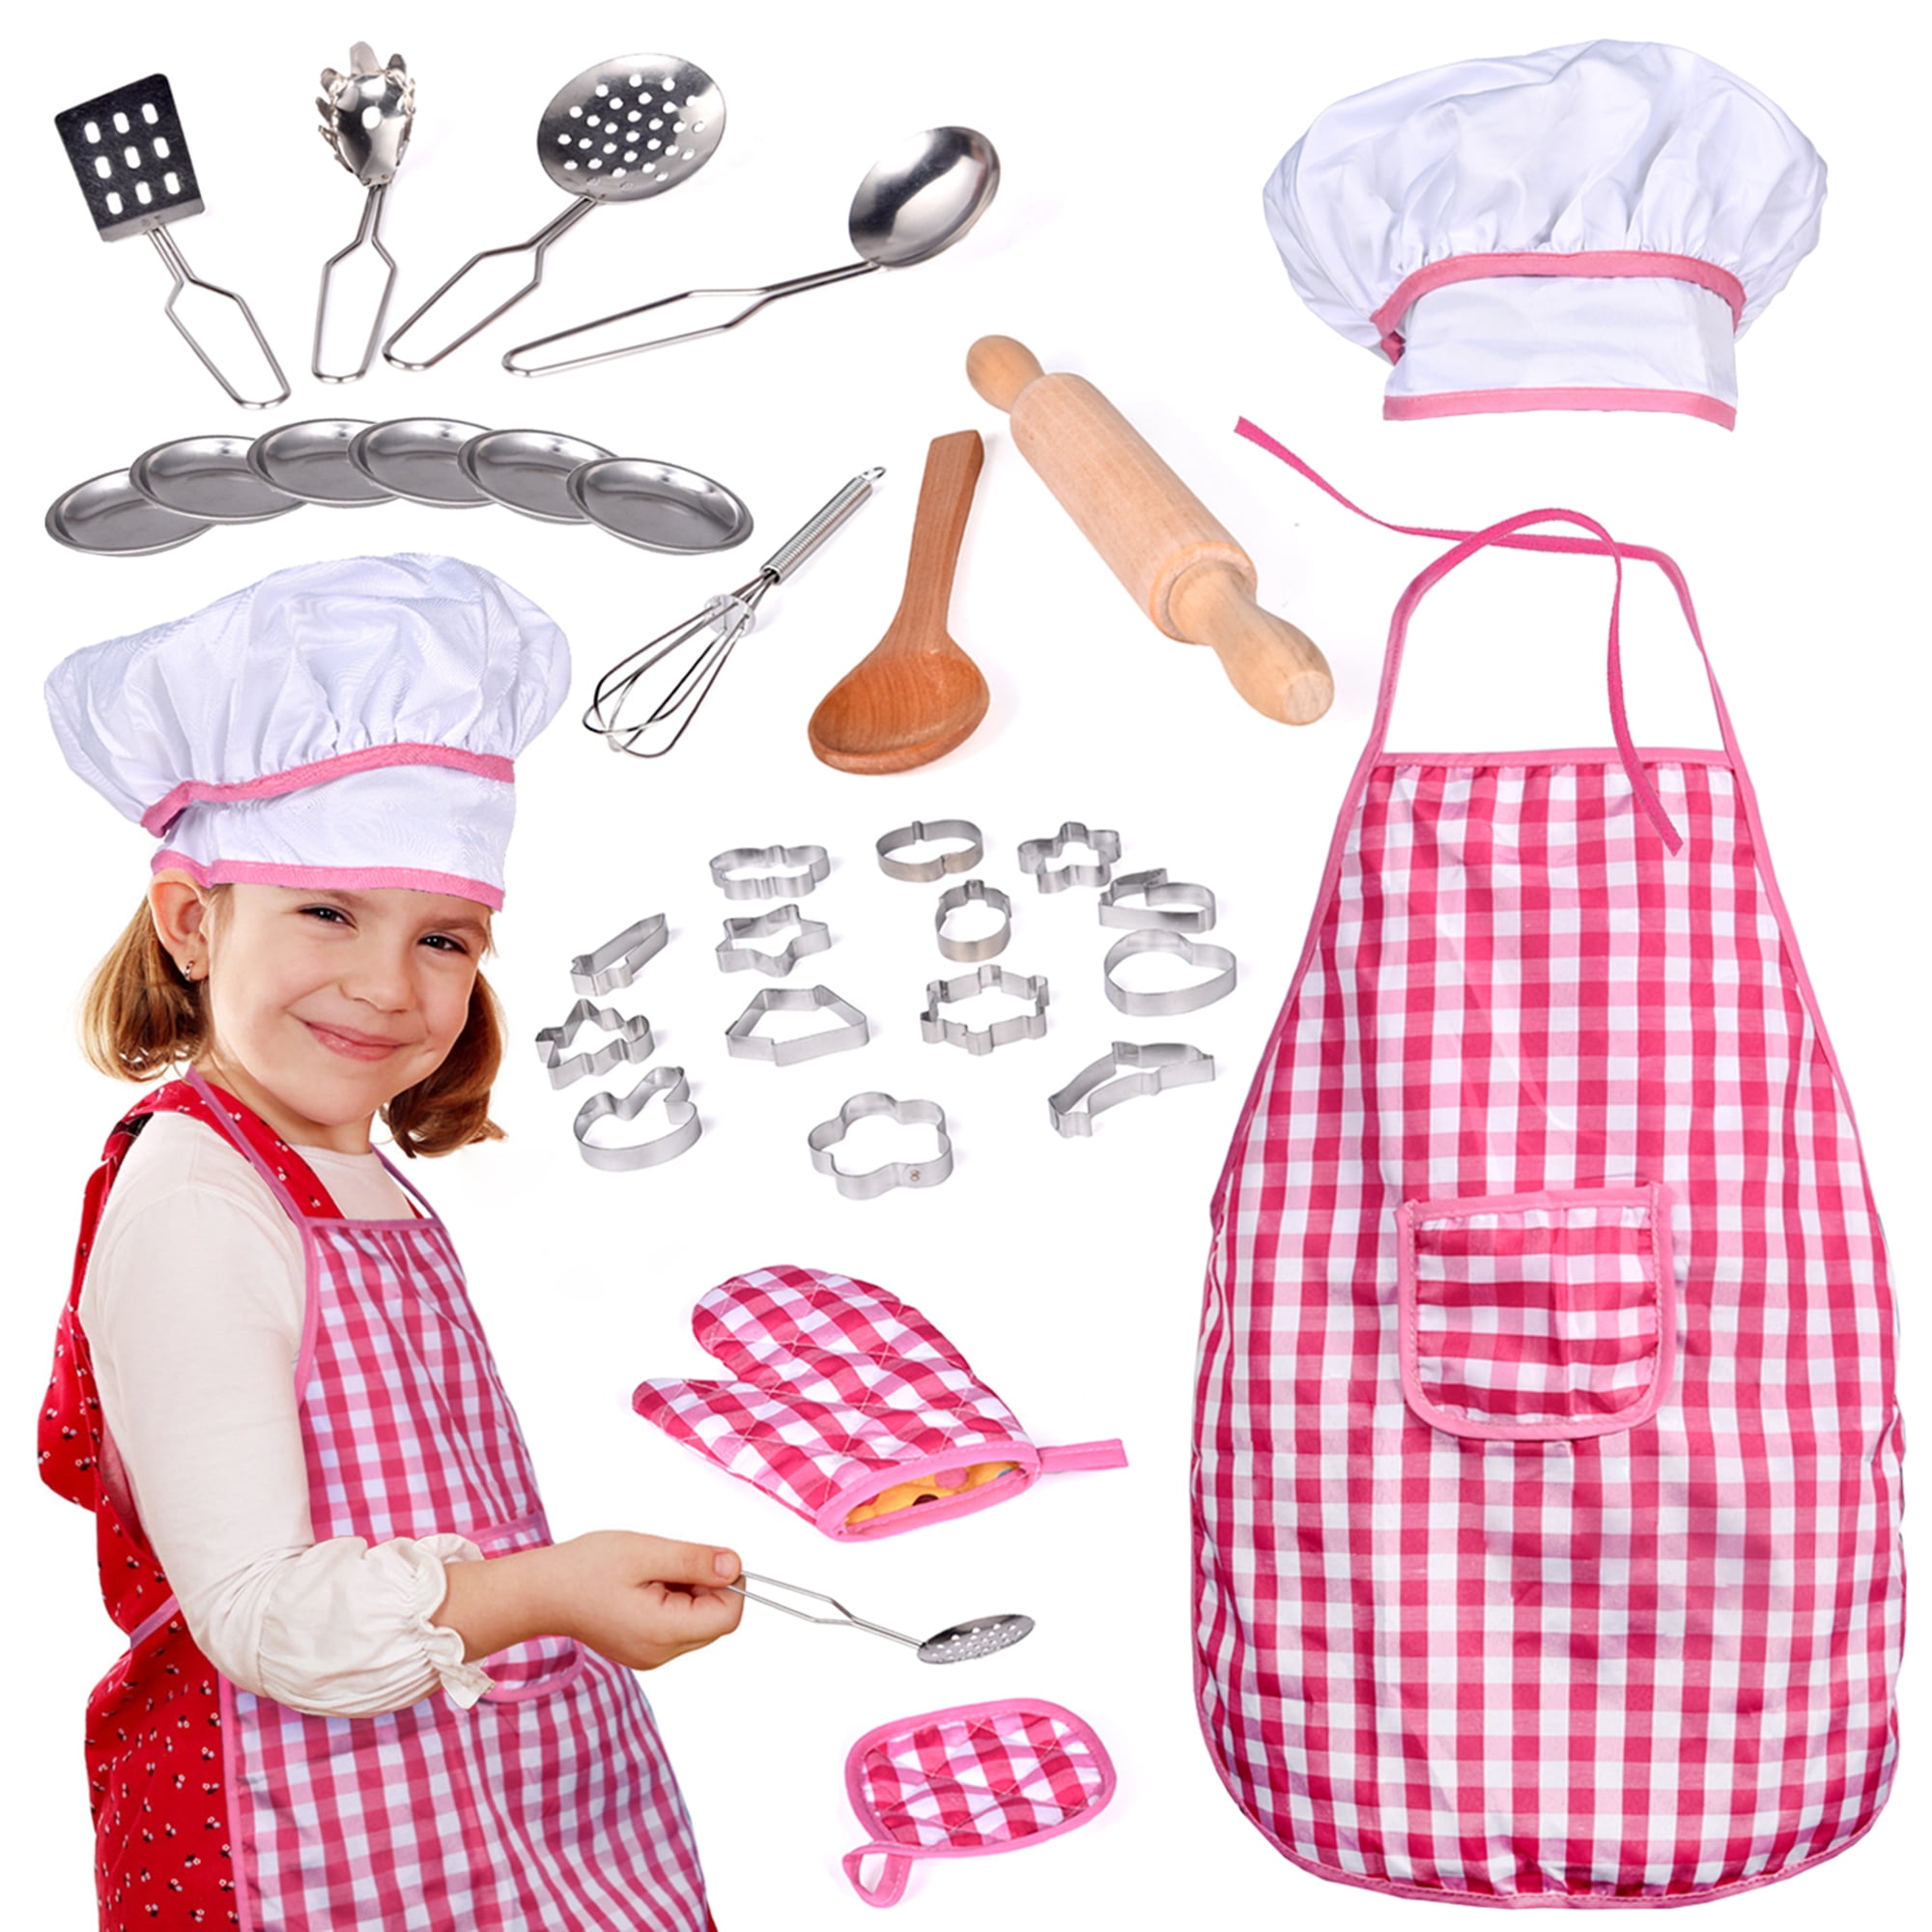 Kids Chef Play Set Pretend Toy Girl Gift Kitchen Cake Apron Mitt Baking Tools 